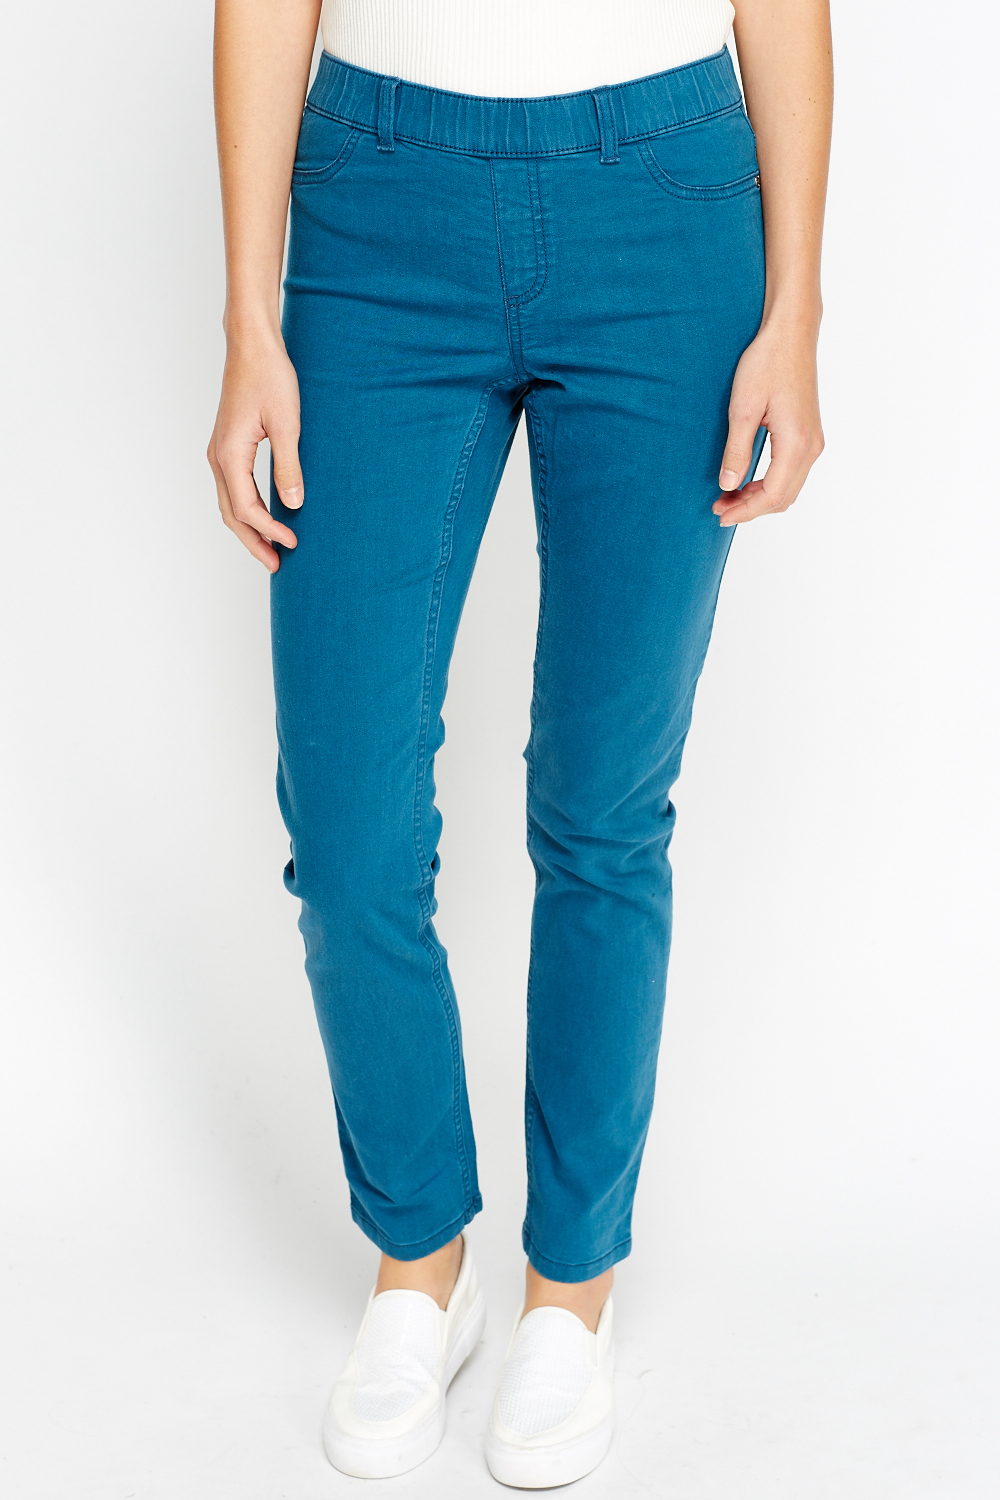 Teal Skinny Denim Jeans - Just $7